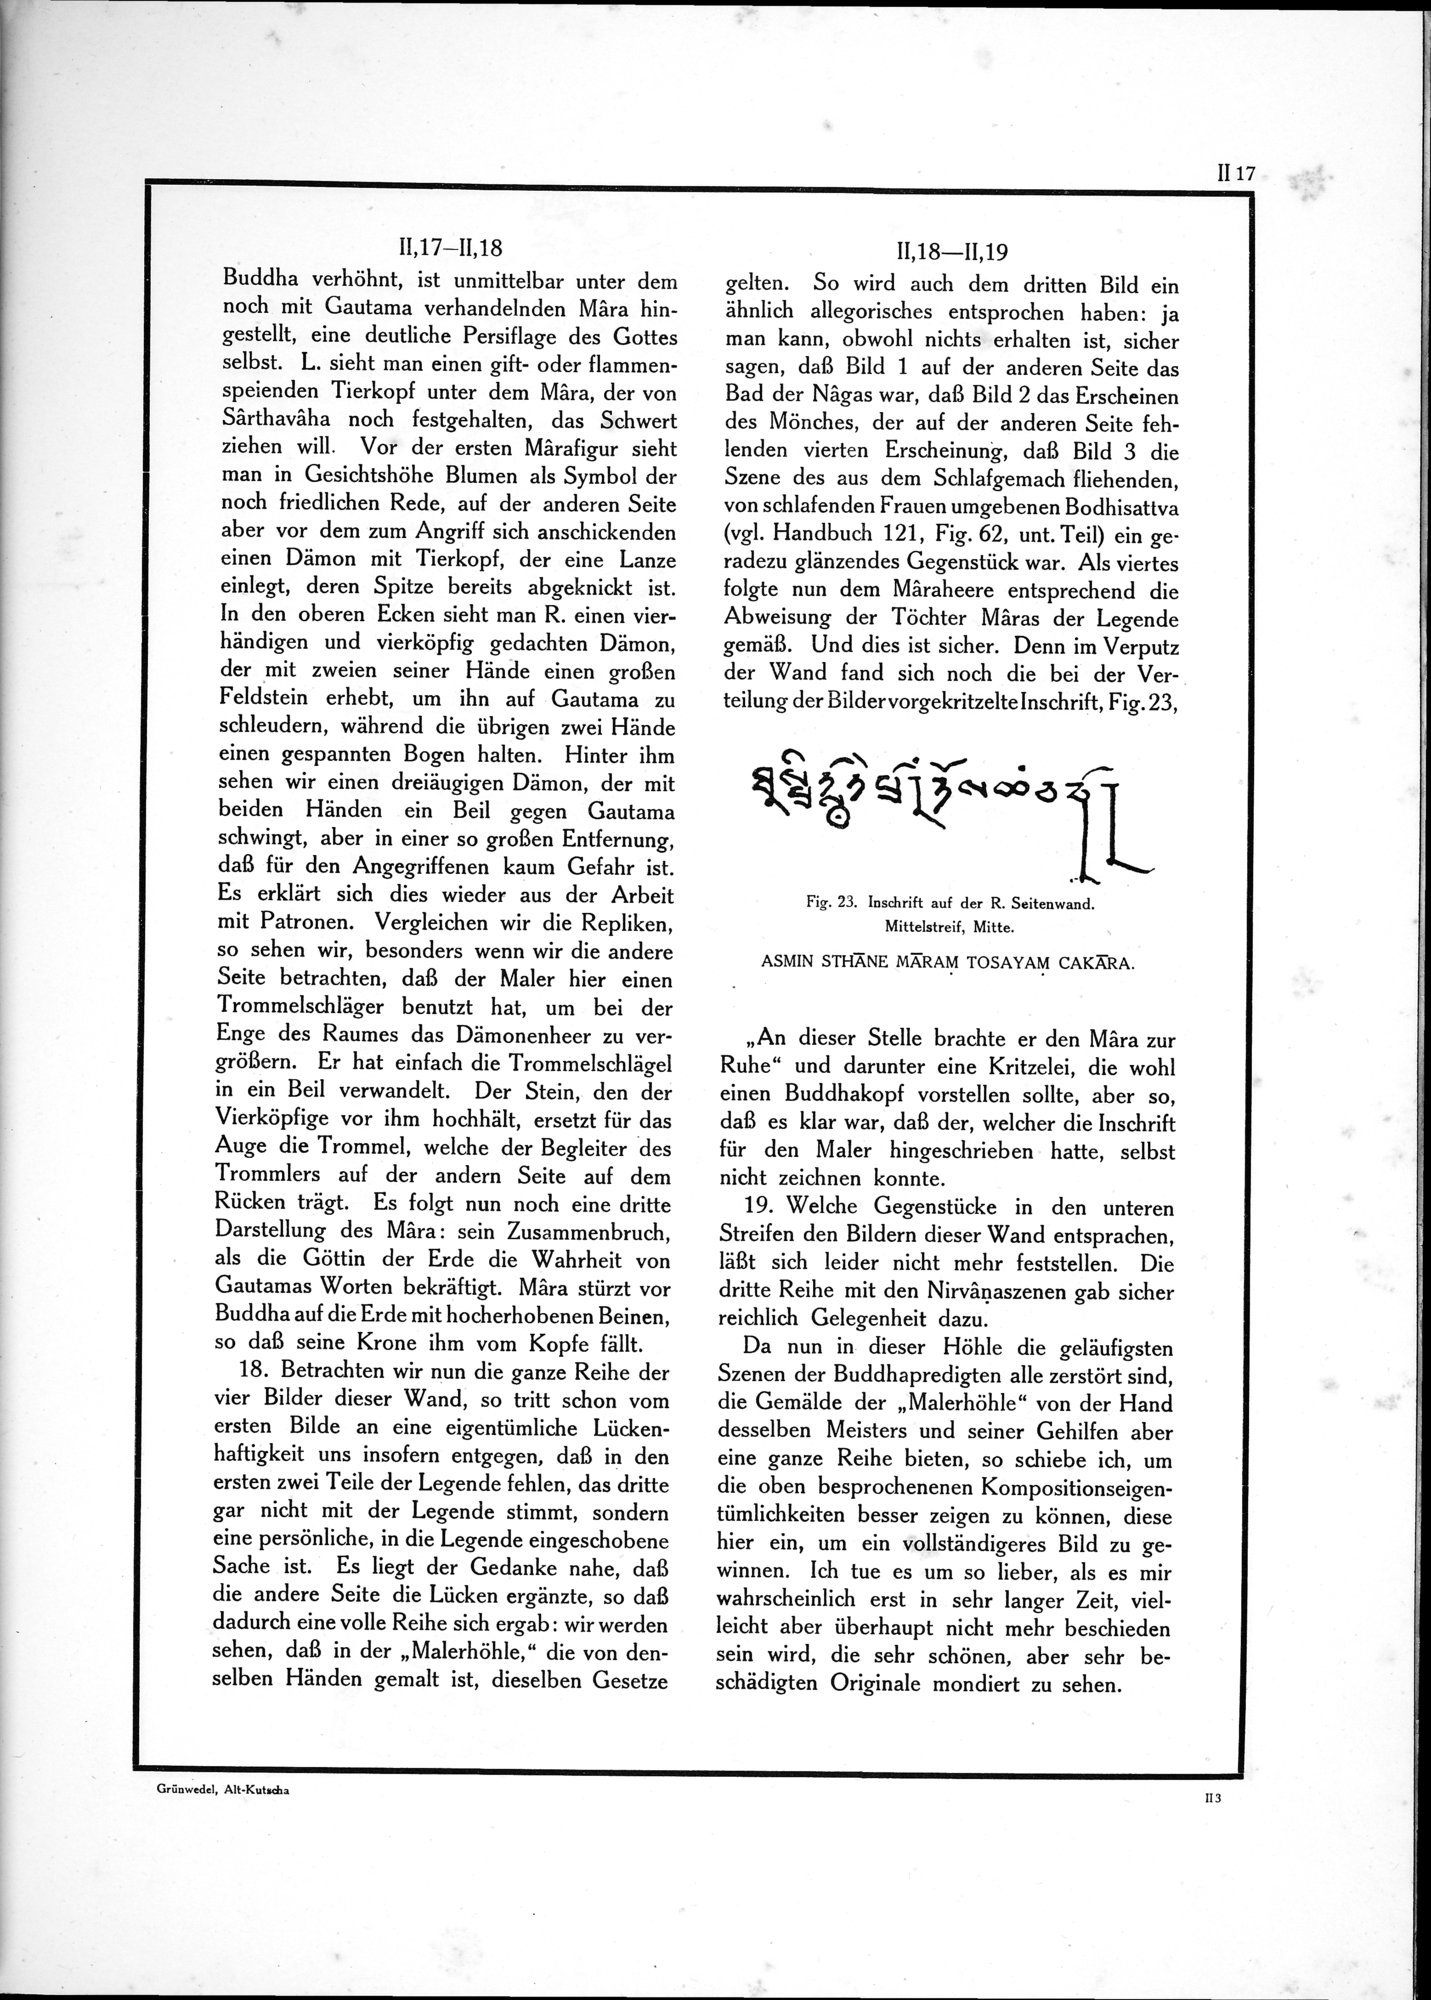 Alt-Kutscha : vol.1 / Page 123 (Grayscale High Resolution Image)